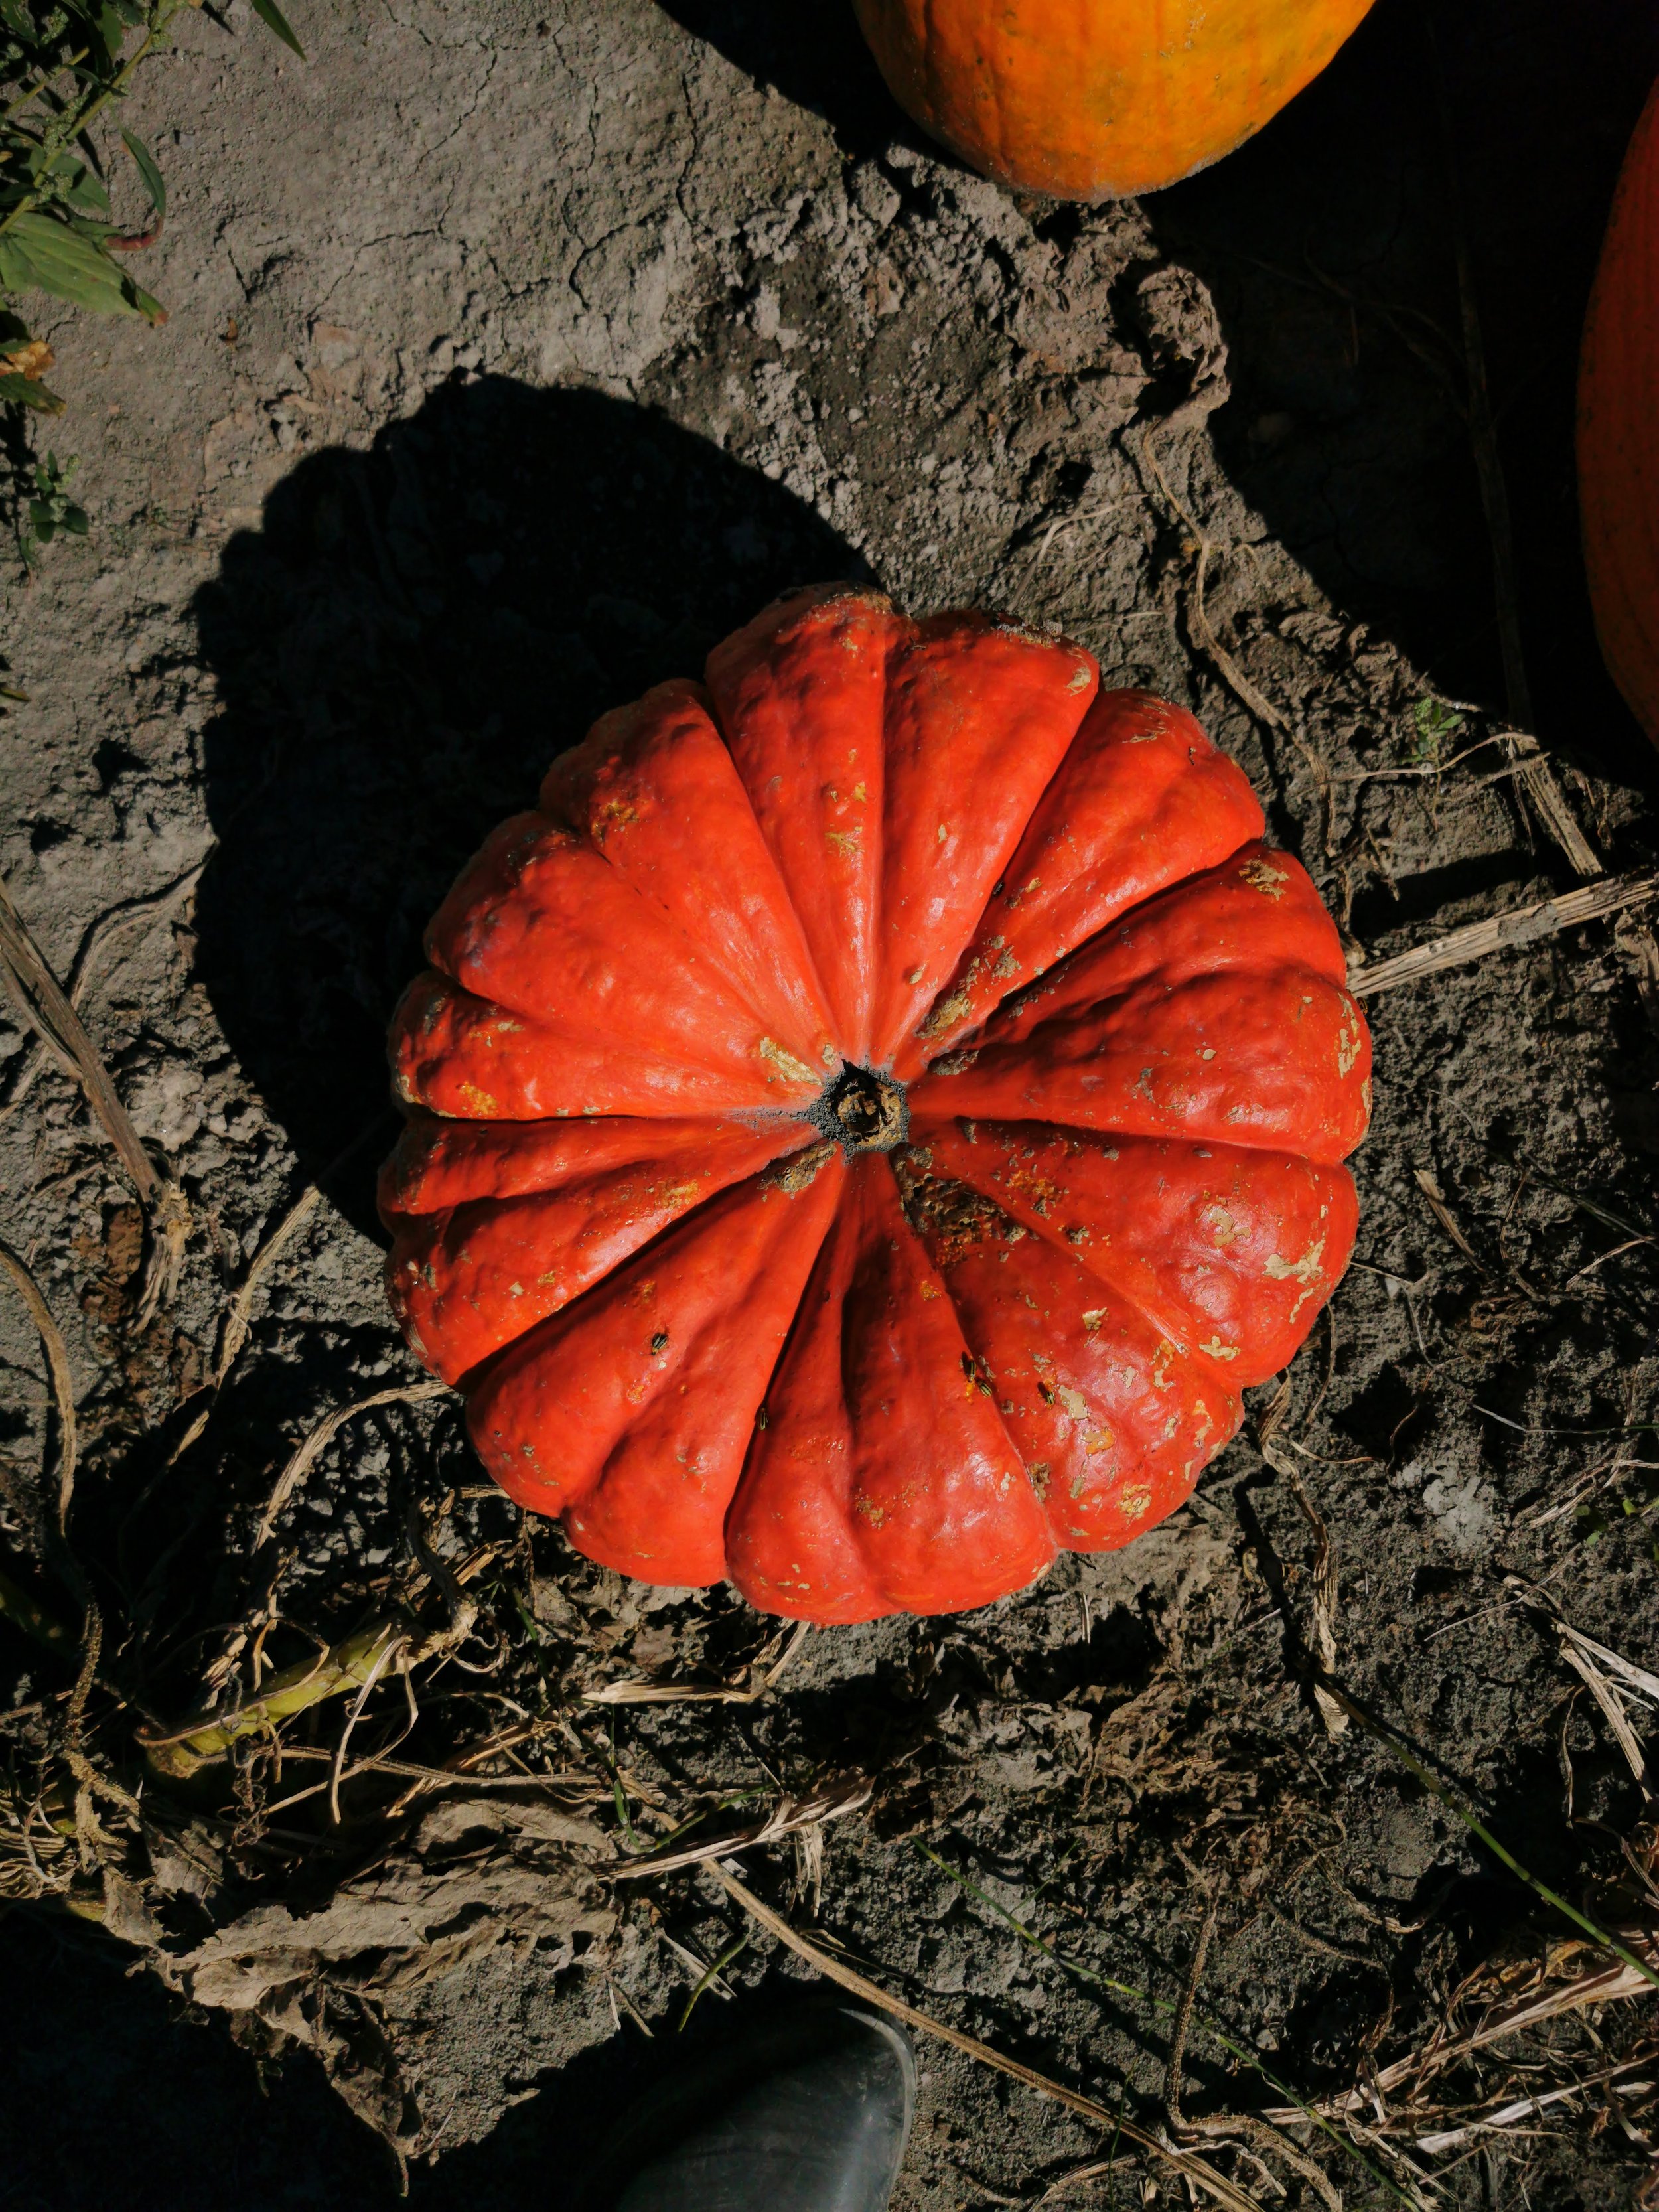 Cinderella's pumpkin (rouge vif d'Etampe)